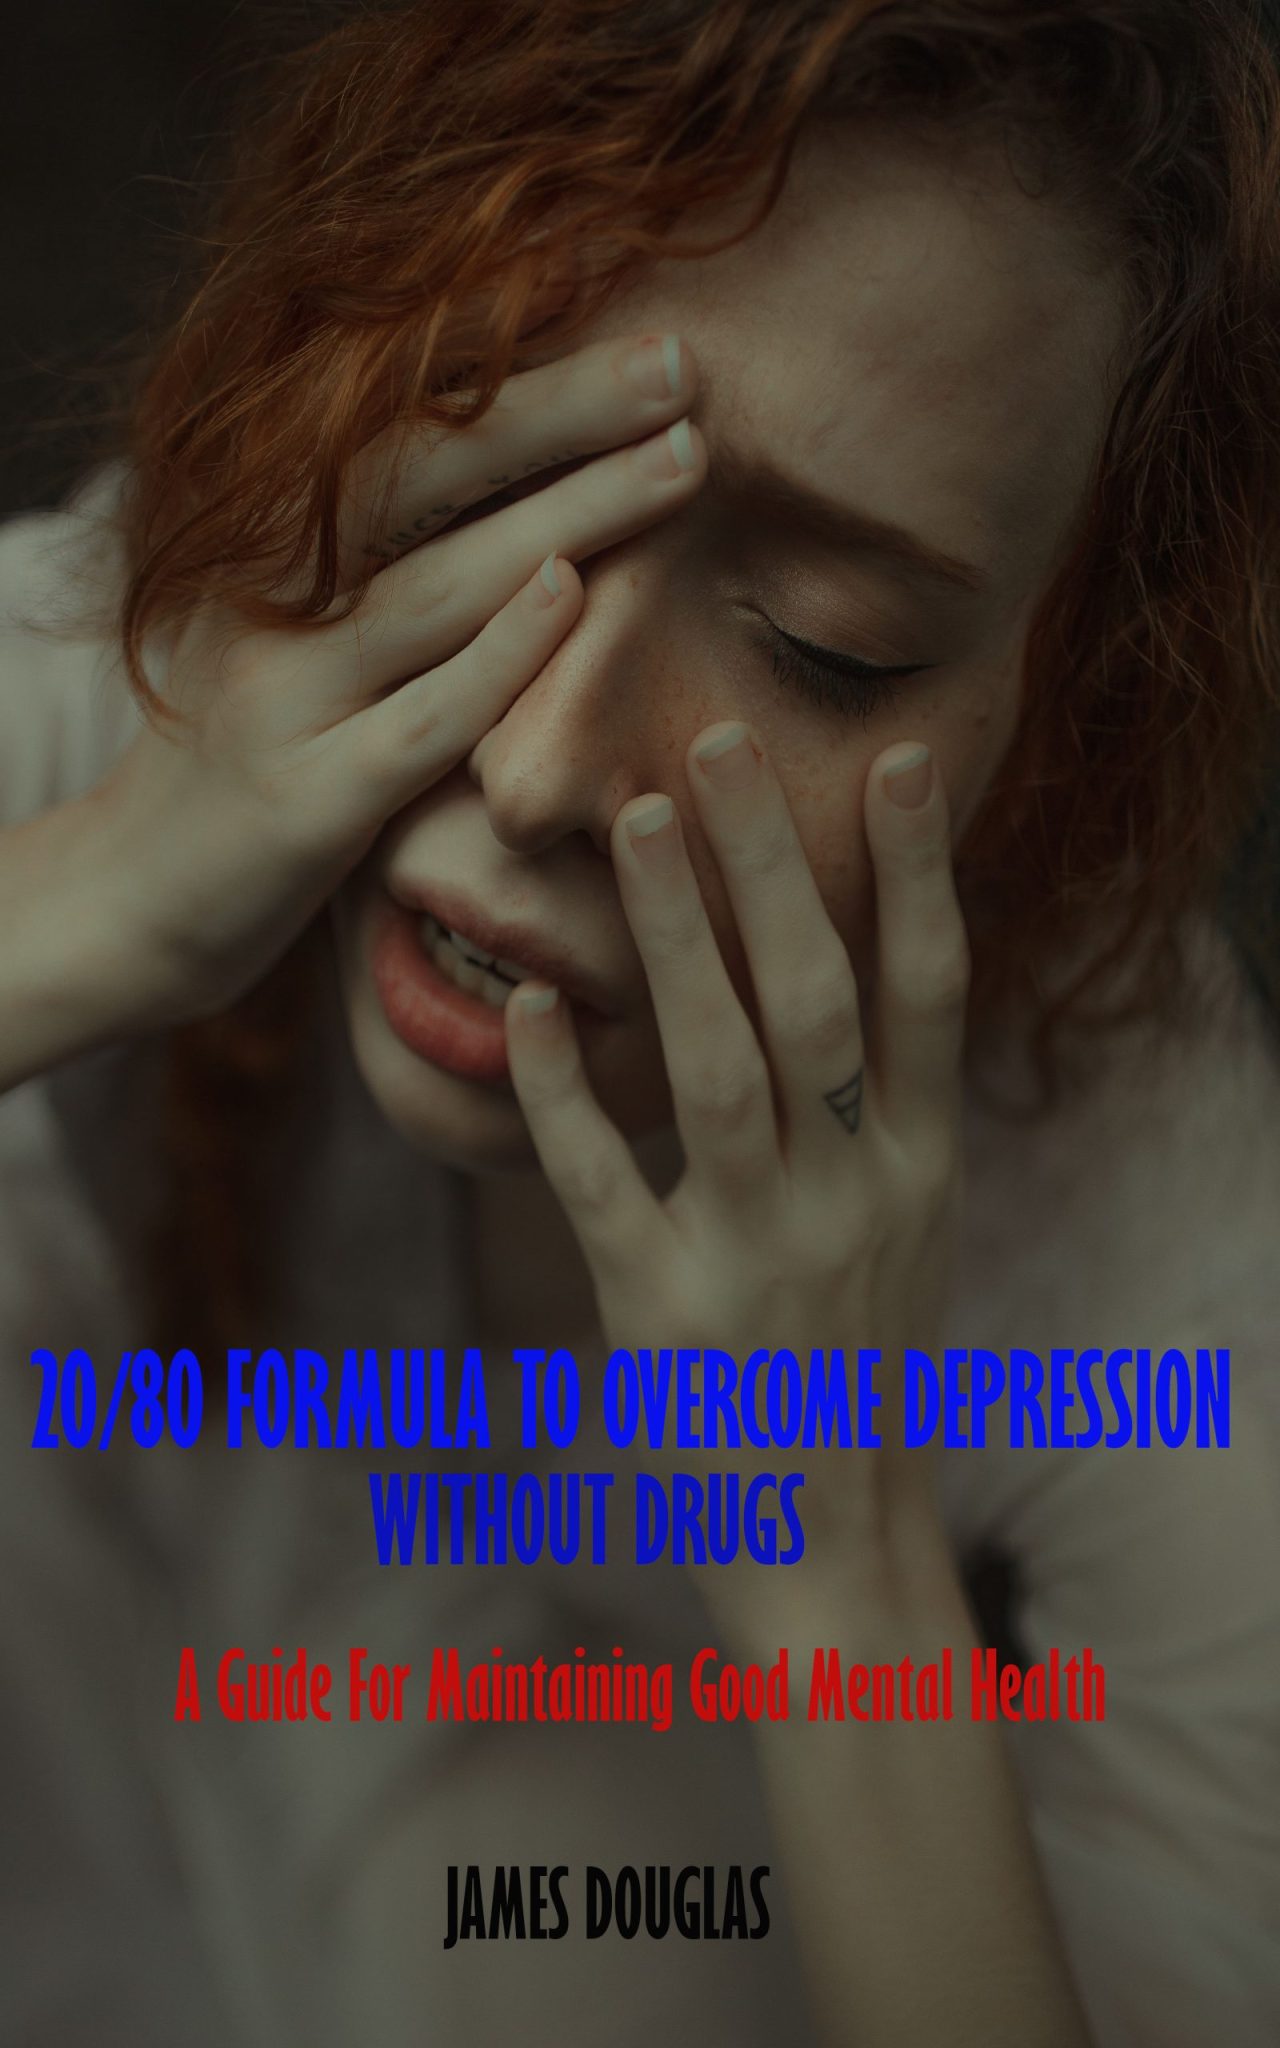 FORMULAR TO OVERCOME DEPRESSION